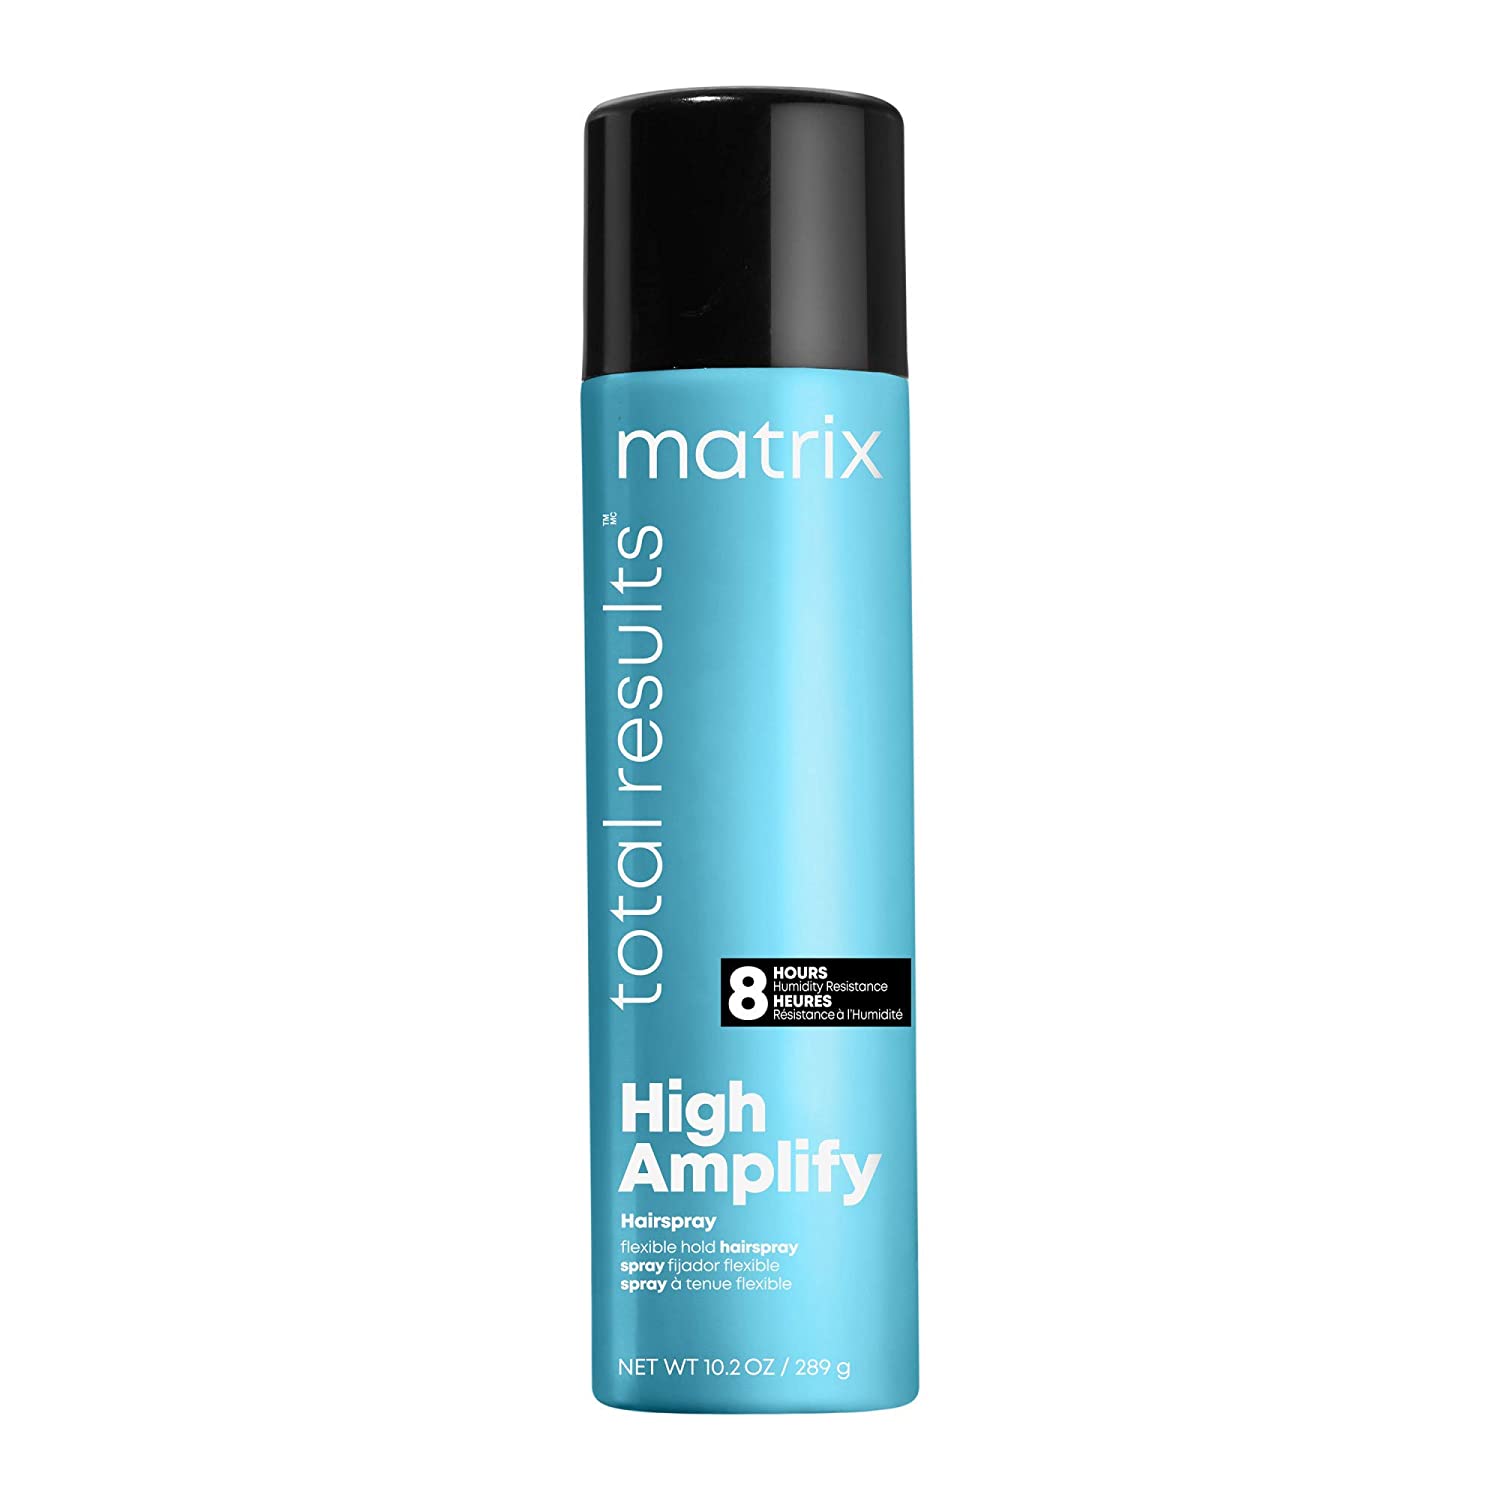 Matrix Total Results High Amplify Hairspray, 10.2 Oz - image 2 of 4